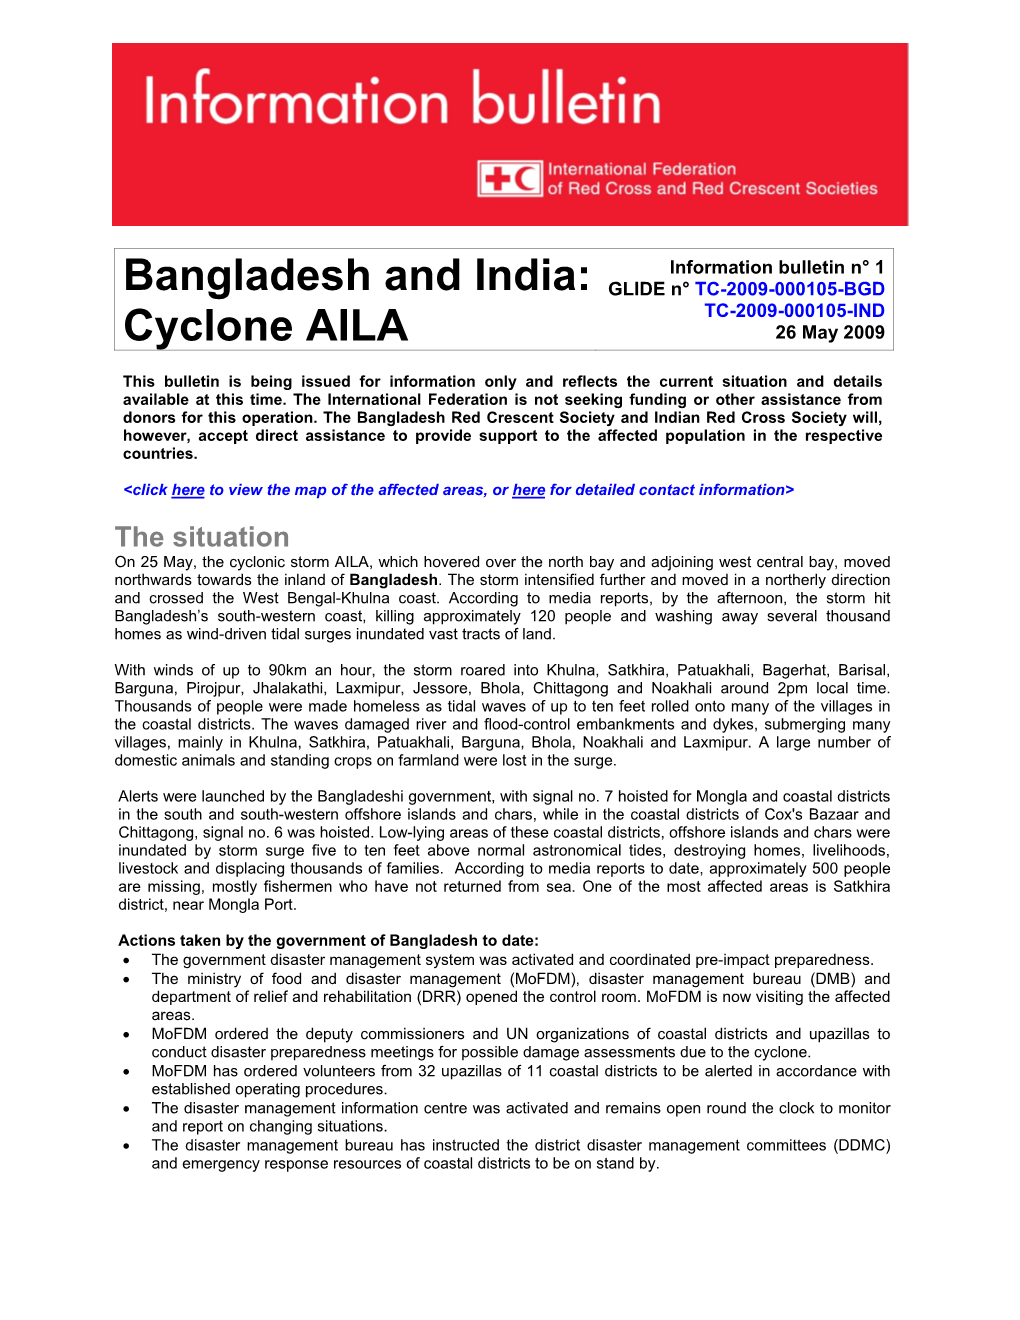 Bangladesh and India: Cyclone AILA